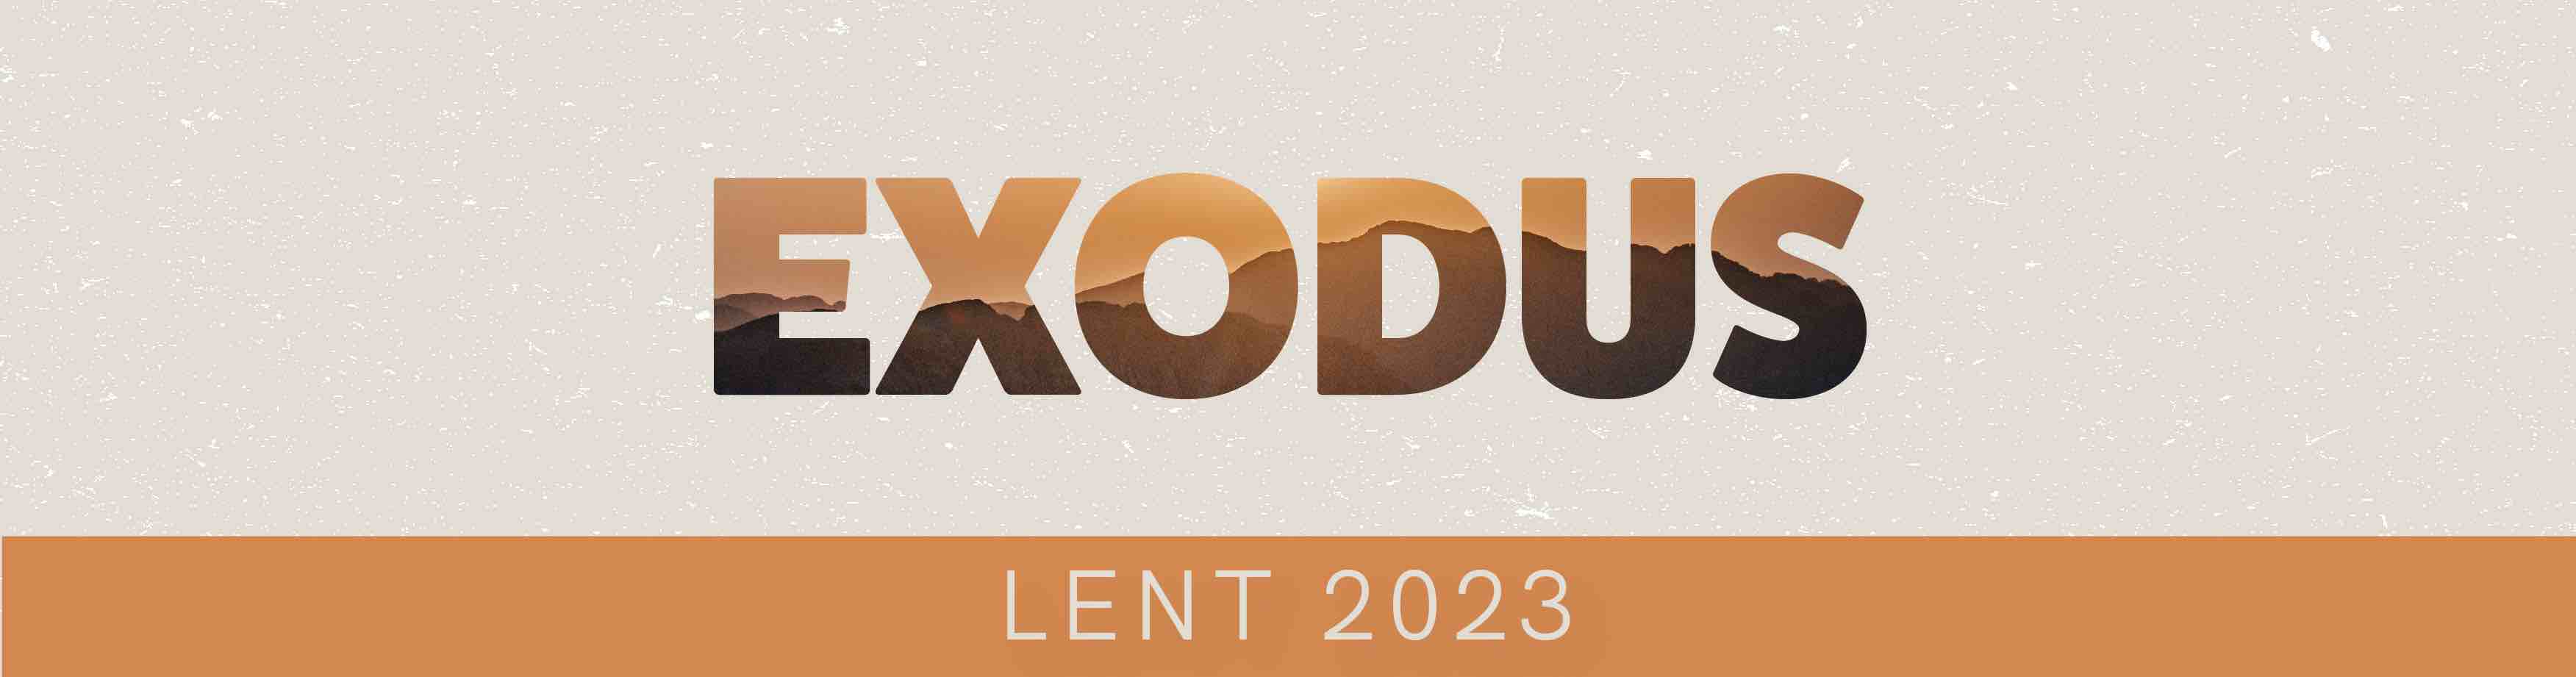 Exodus Lent Page - Web Header 